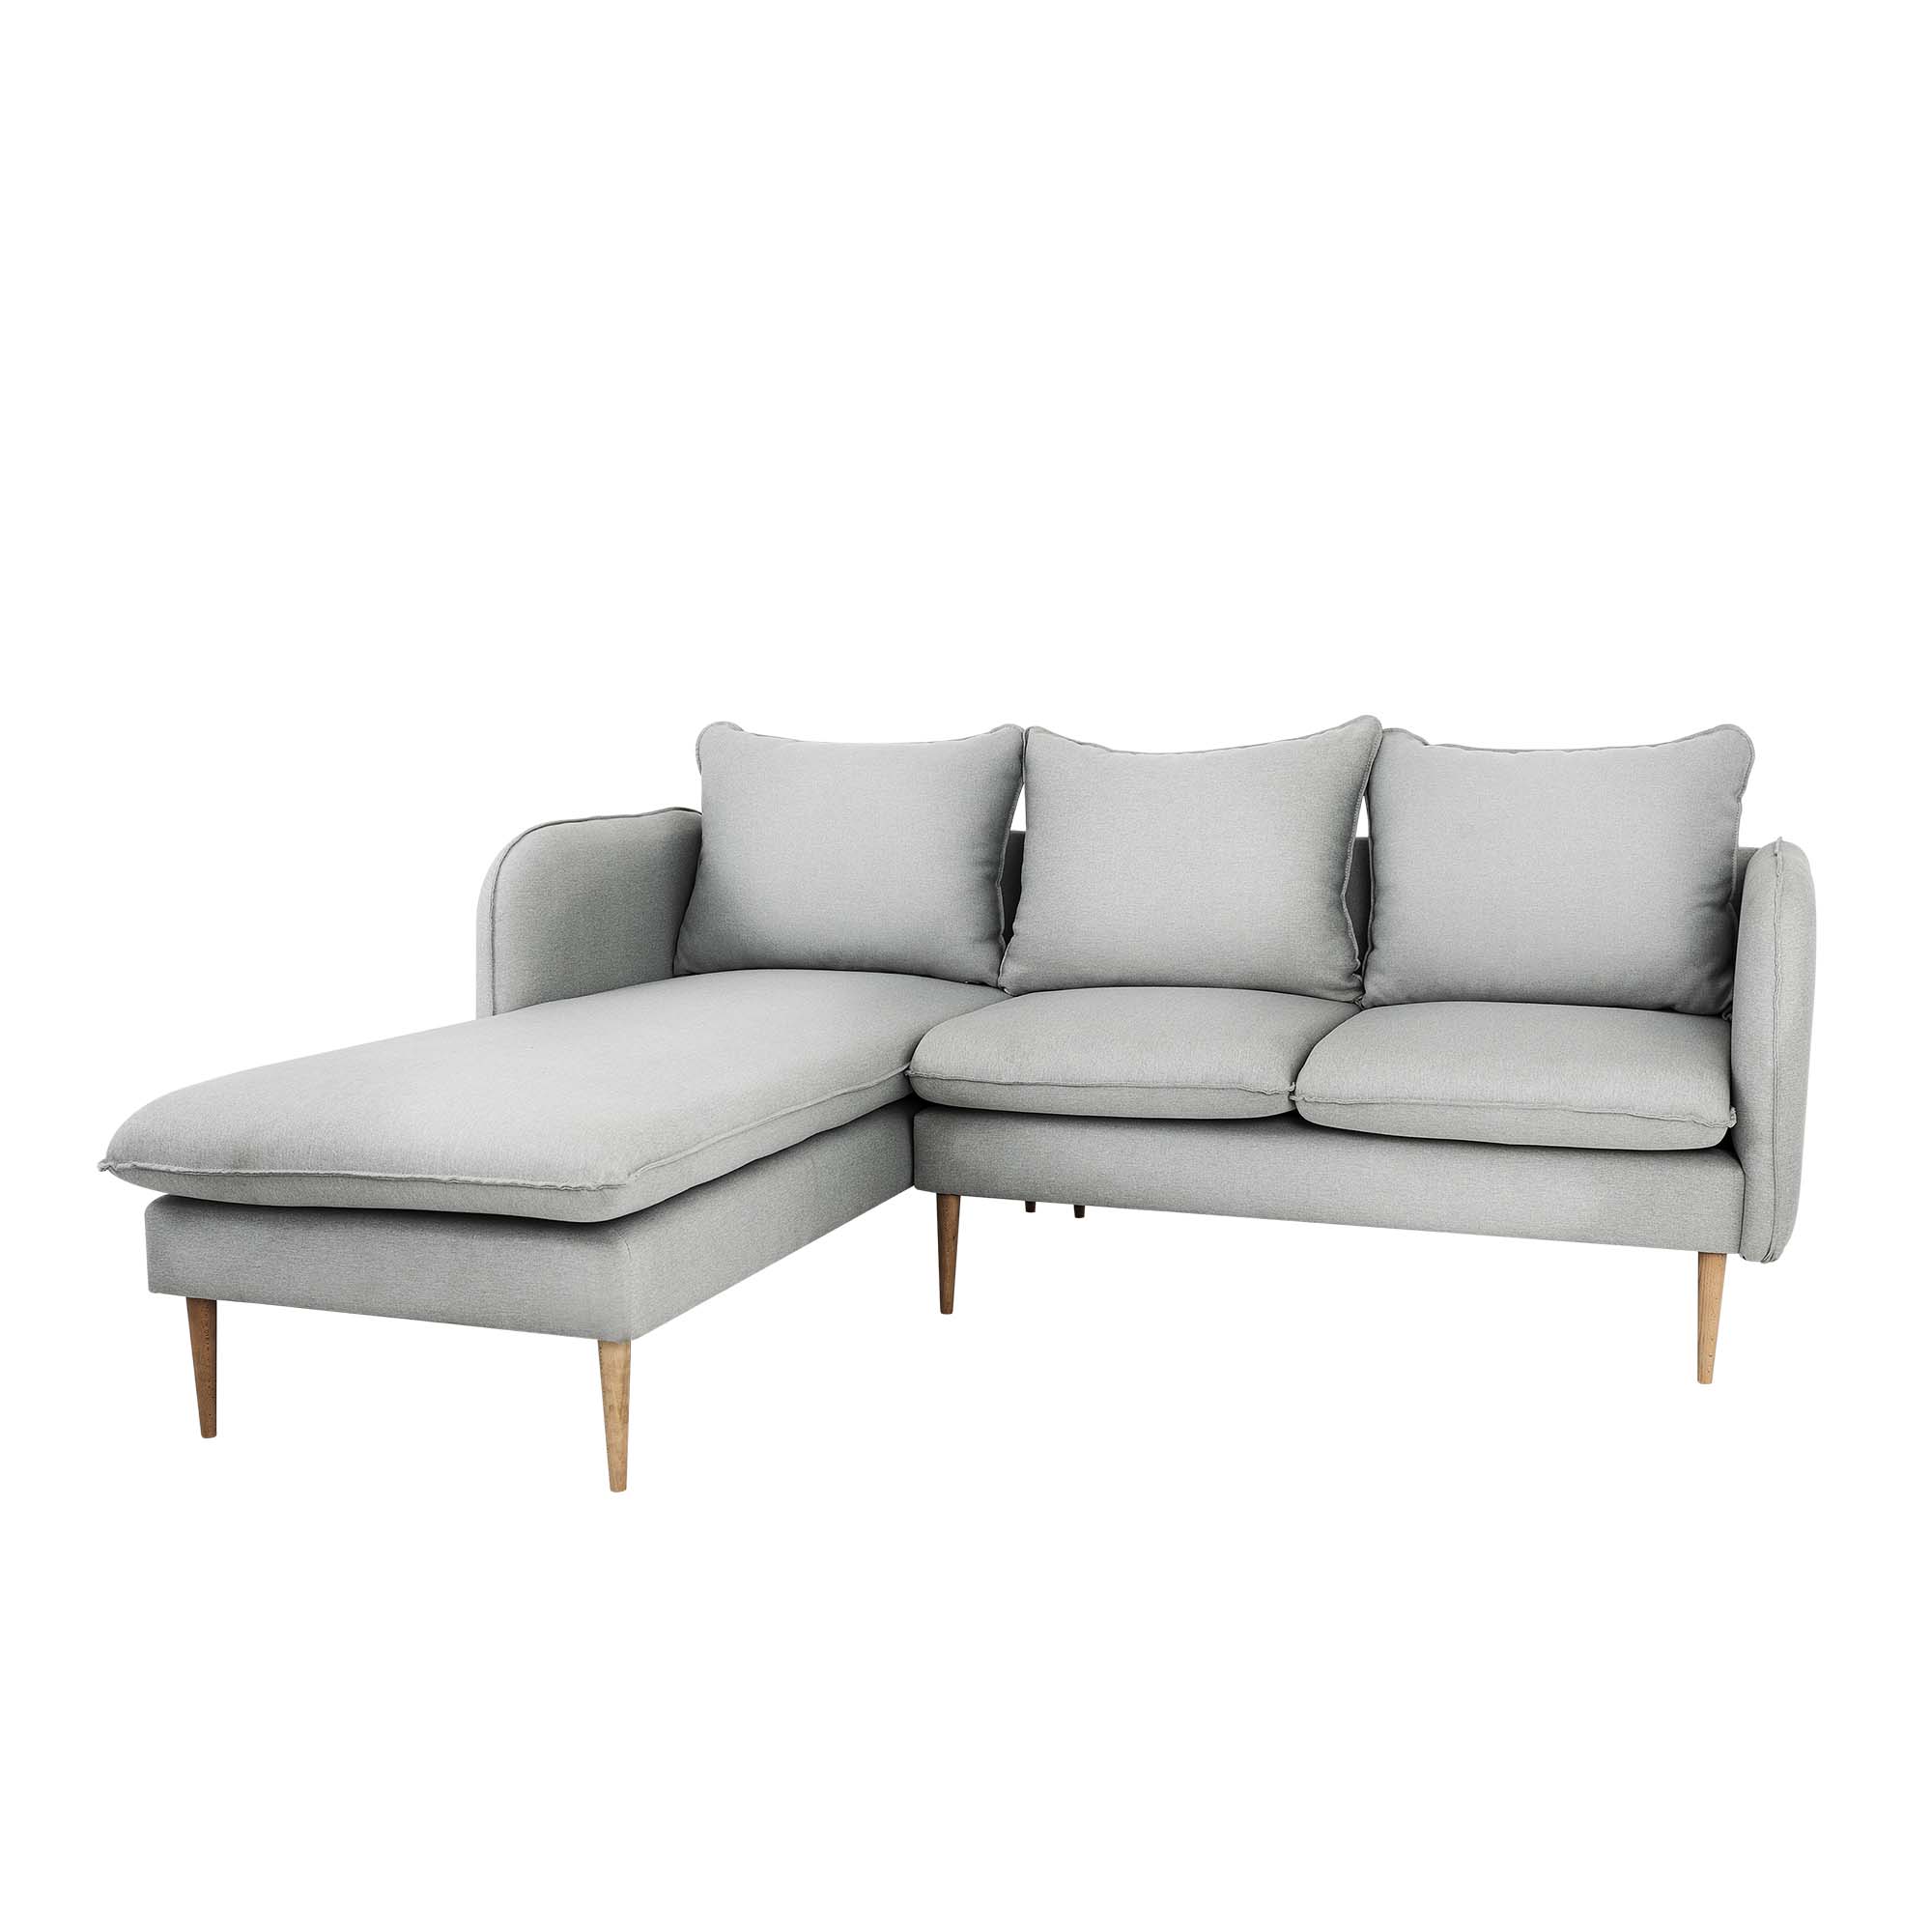 POSH WOOD Corner Sofa Left upholstery colour grey white background